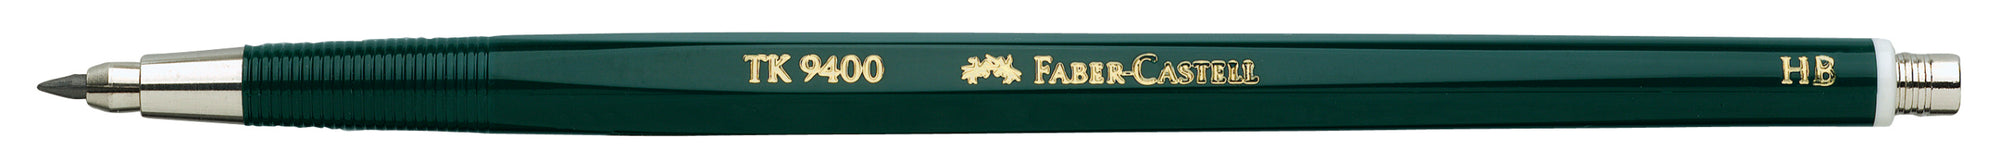 Faber-castell TK 9400 clutch pencil HB - Blesket Canada